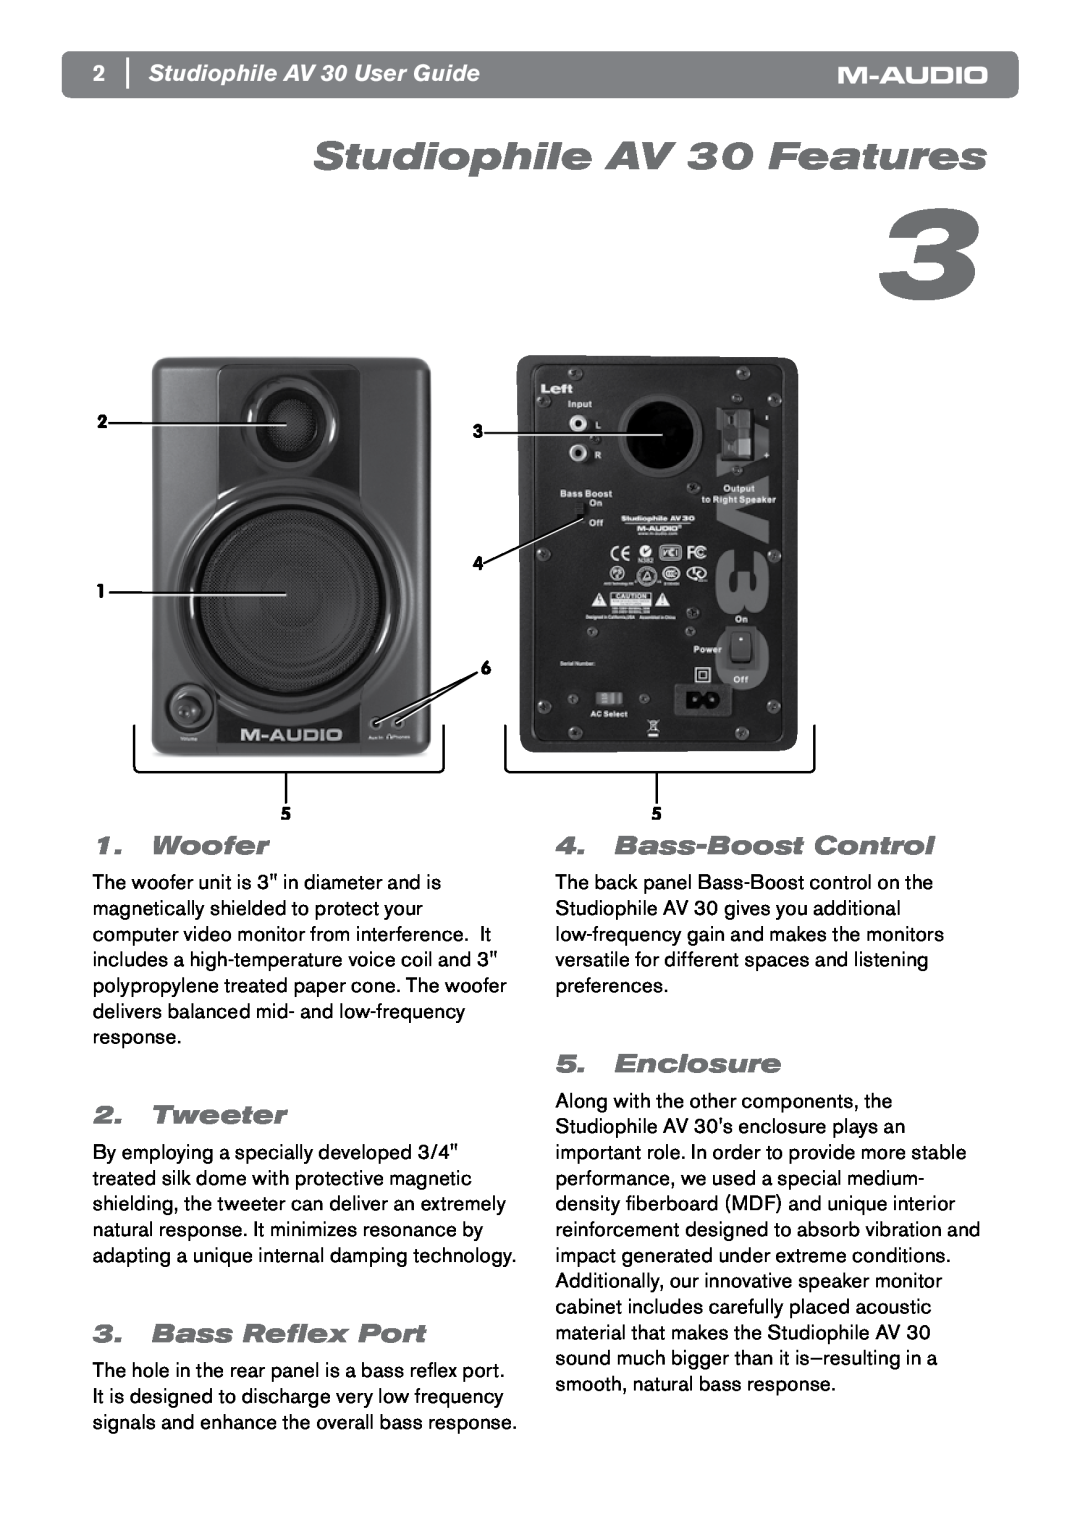 M-Audio manual Studiophile AV 30 Features, Woofer, Tweeter, Bass Reflex Port, Bass-Boost Control, Enclosure 